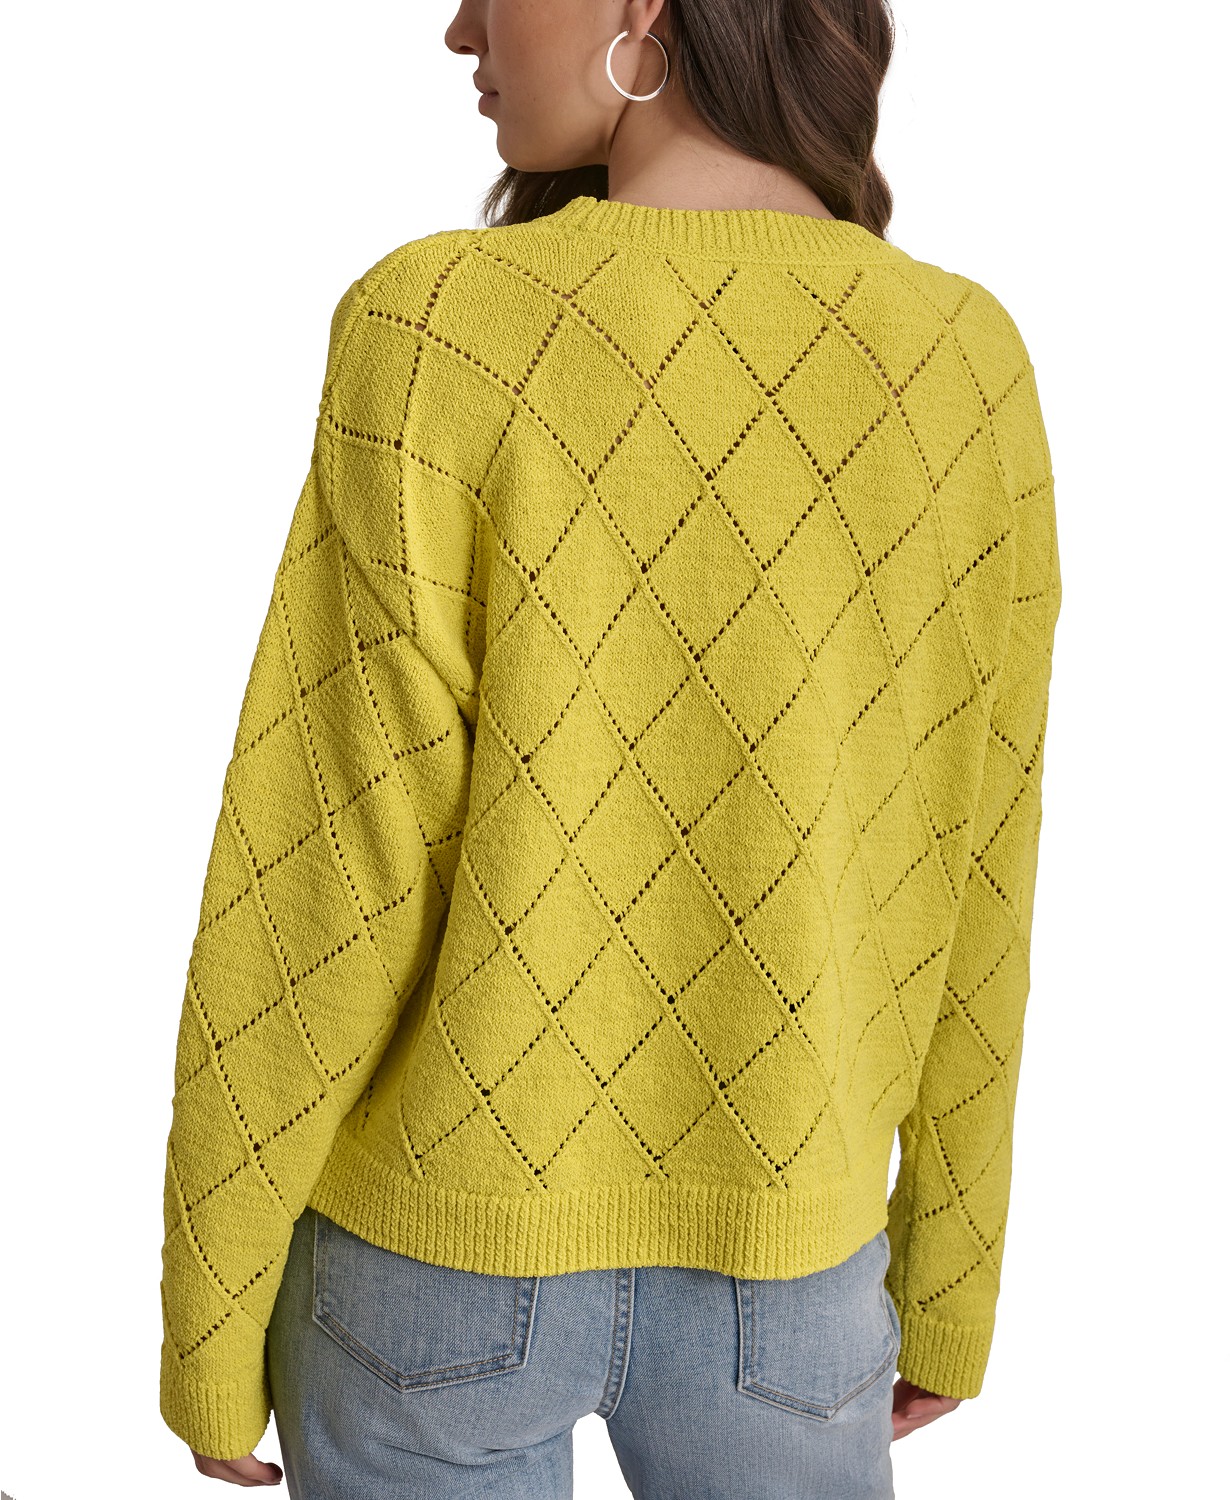 DKNY Womens Diamond-Shaped Pointelle Sweater